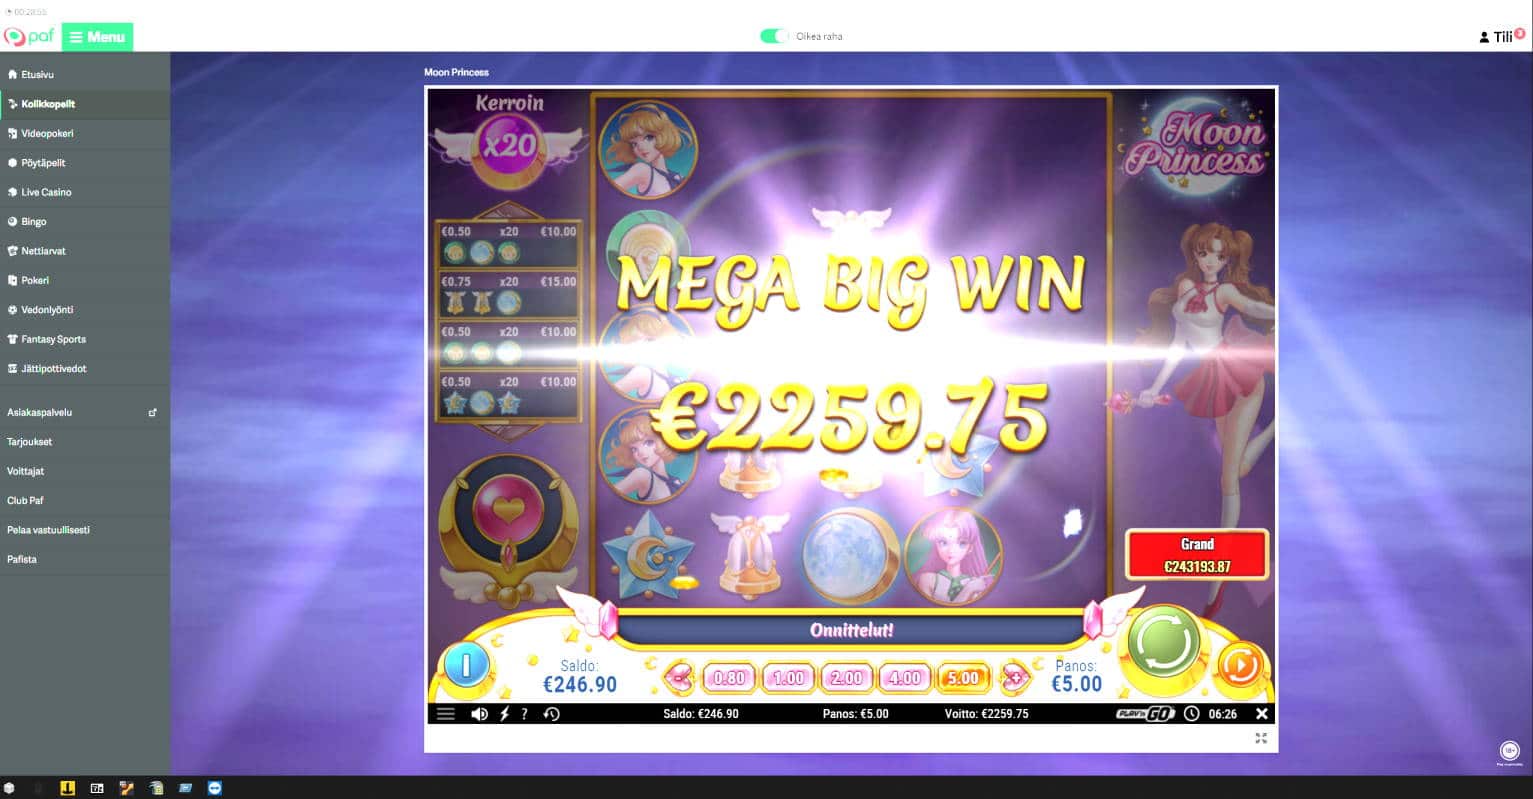 Moon Princess Casino win picture by Perkl566 4.6.2022 2259.75e 452X Paf